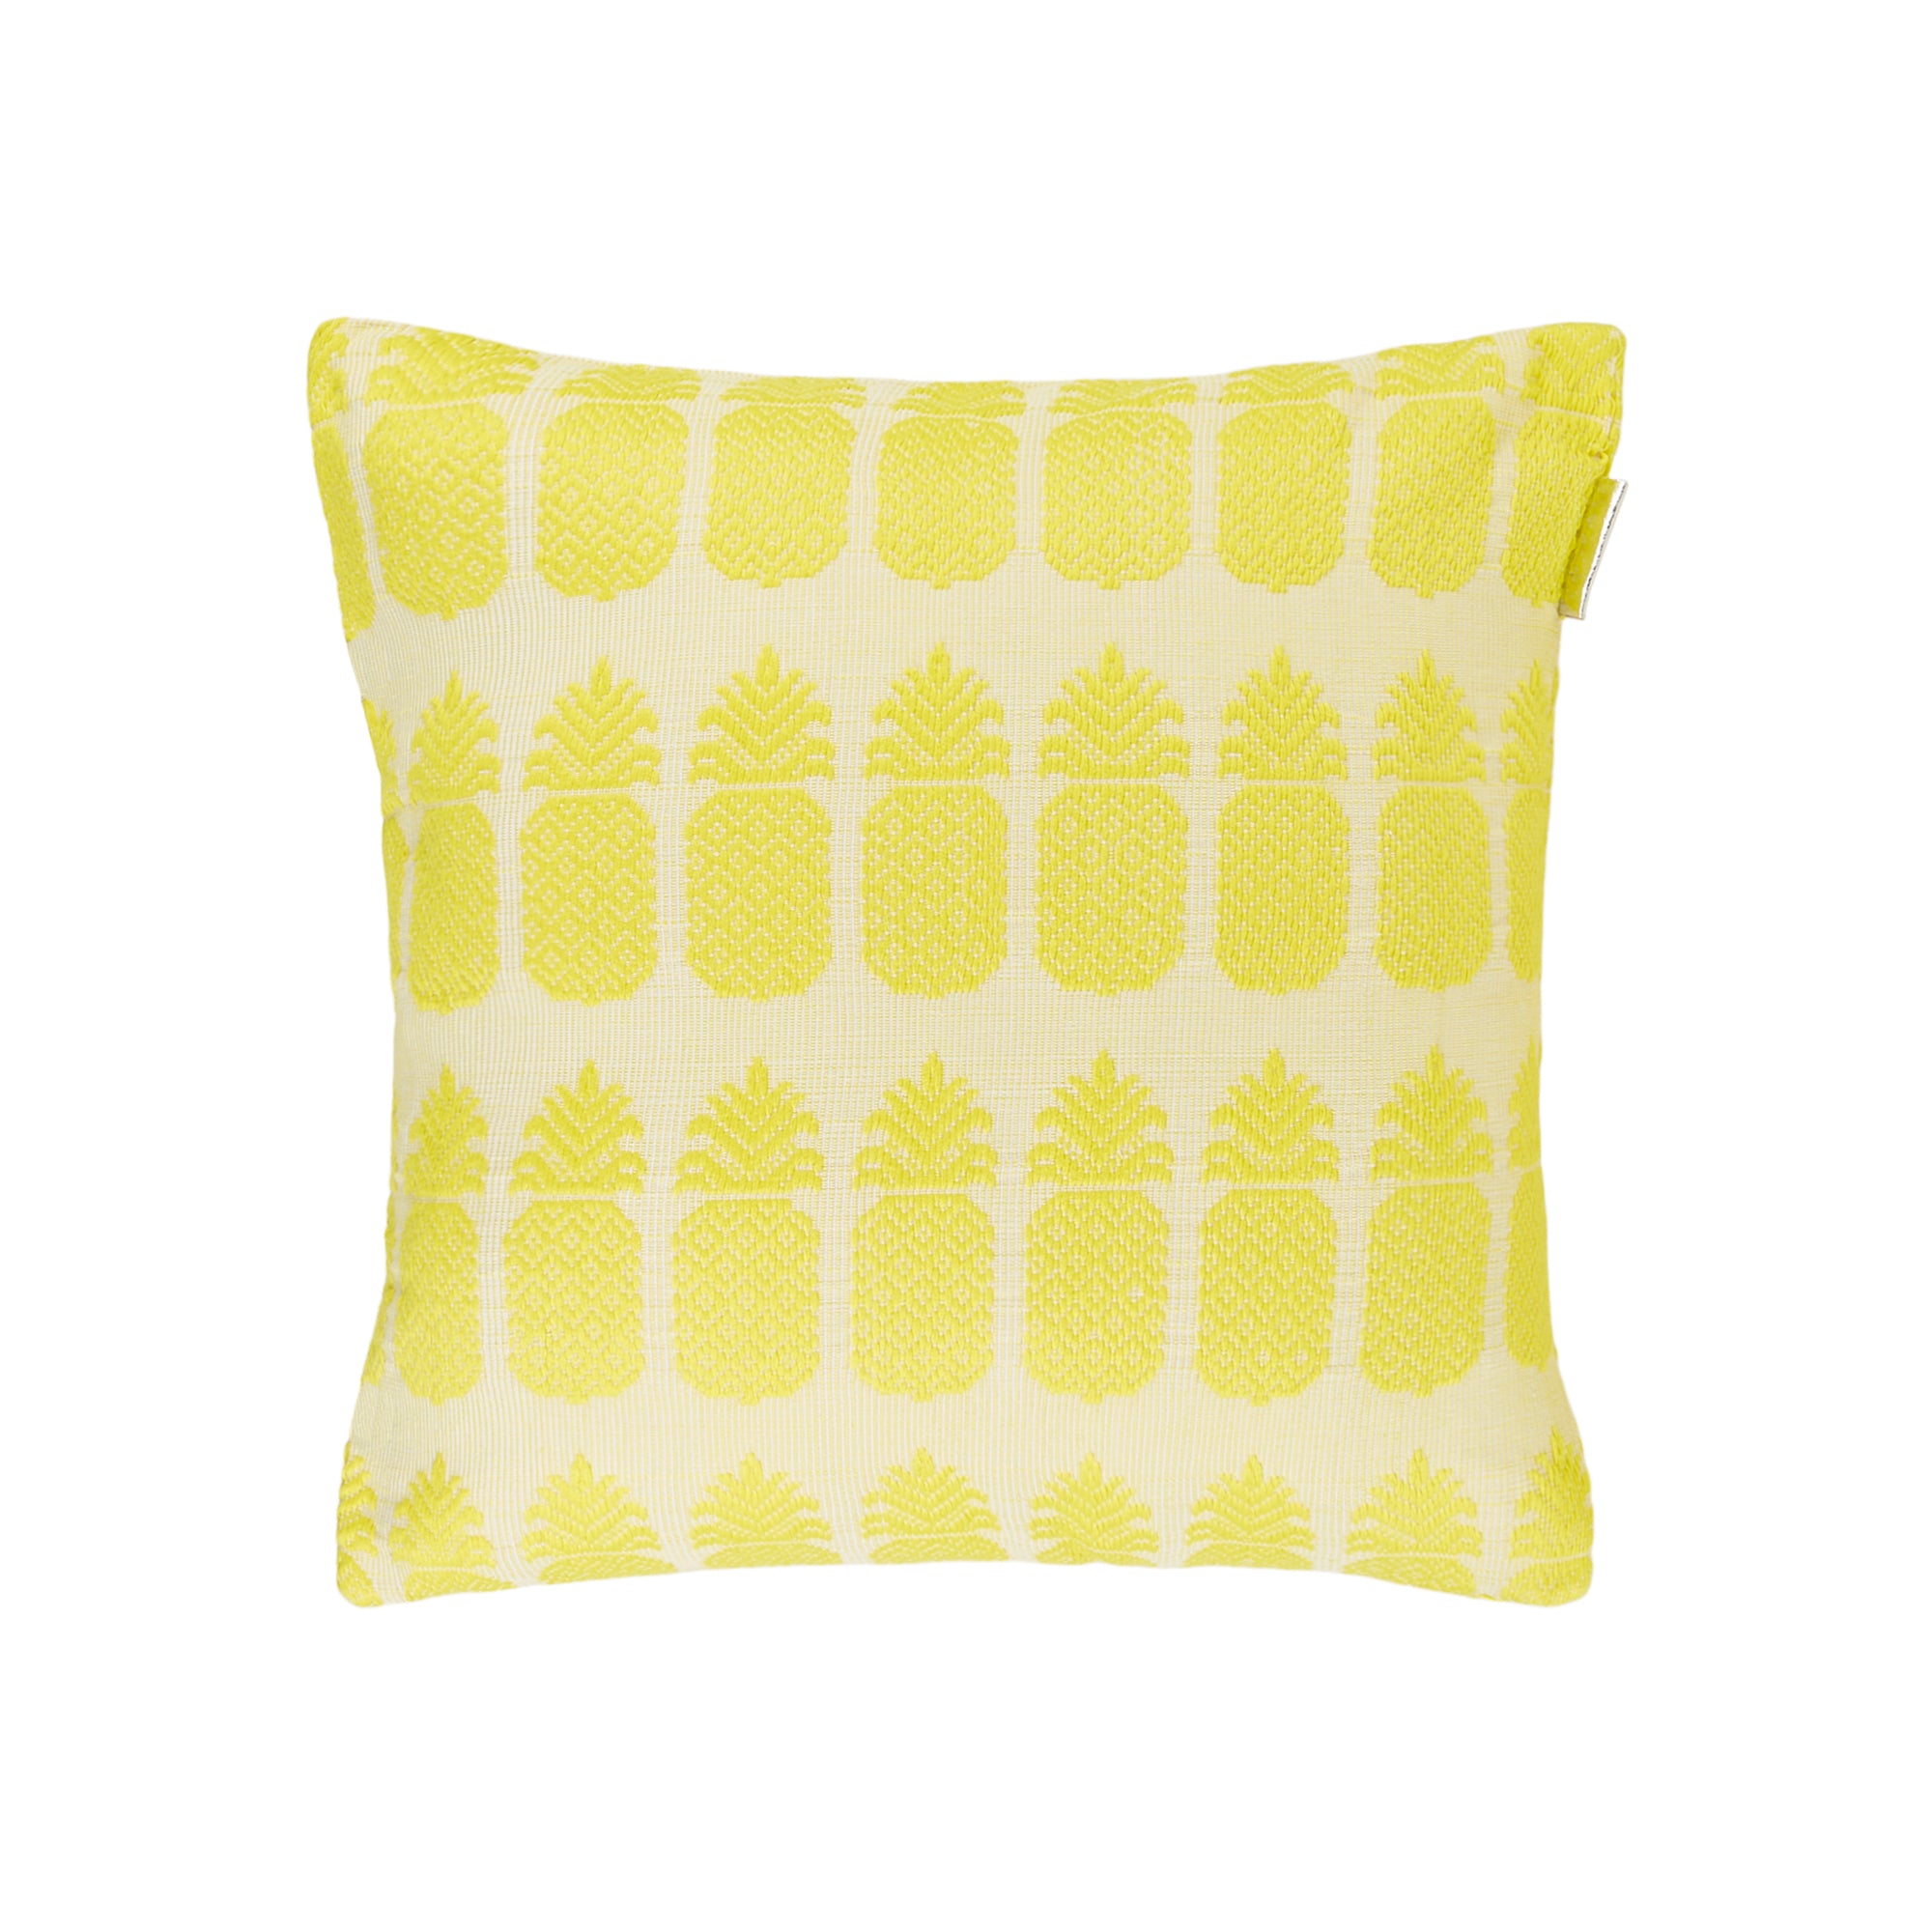 Yellow Pineapple Cushion Cover